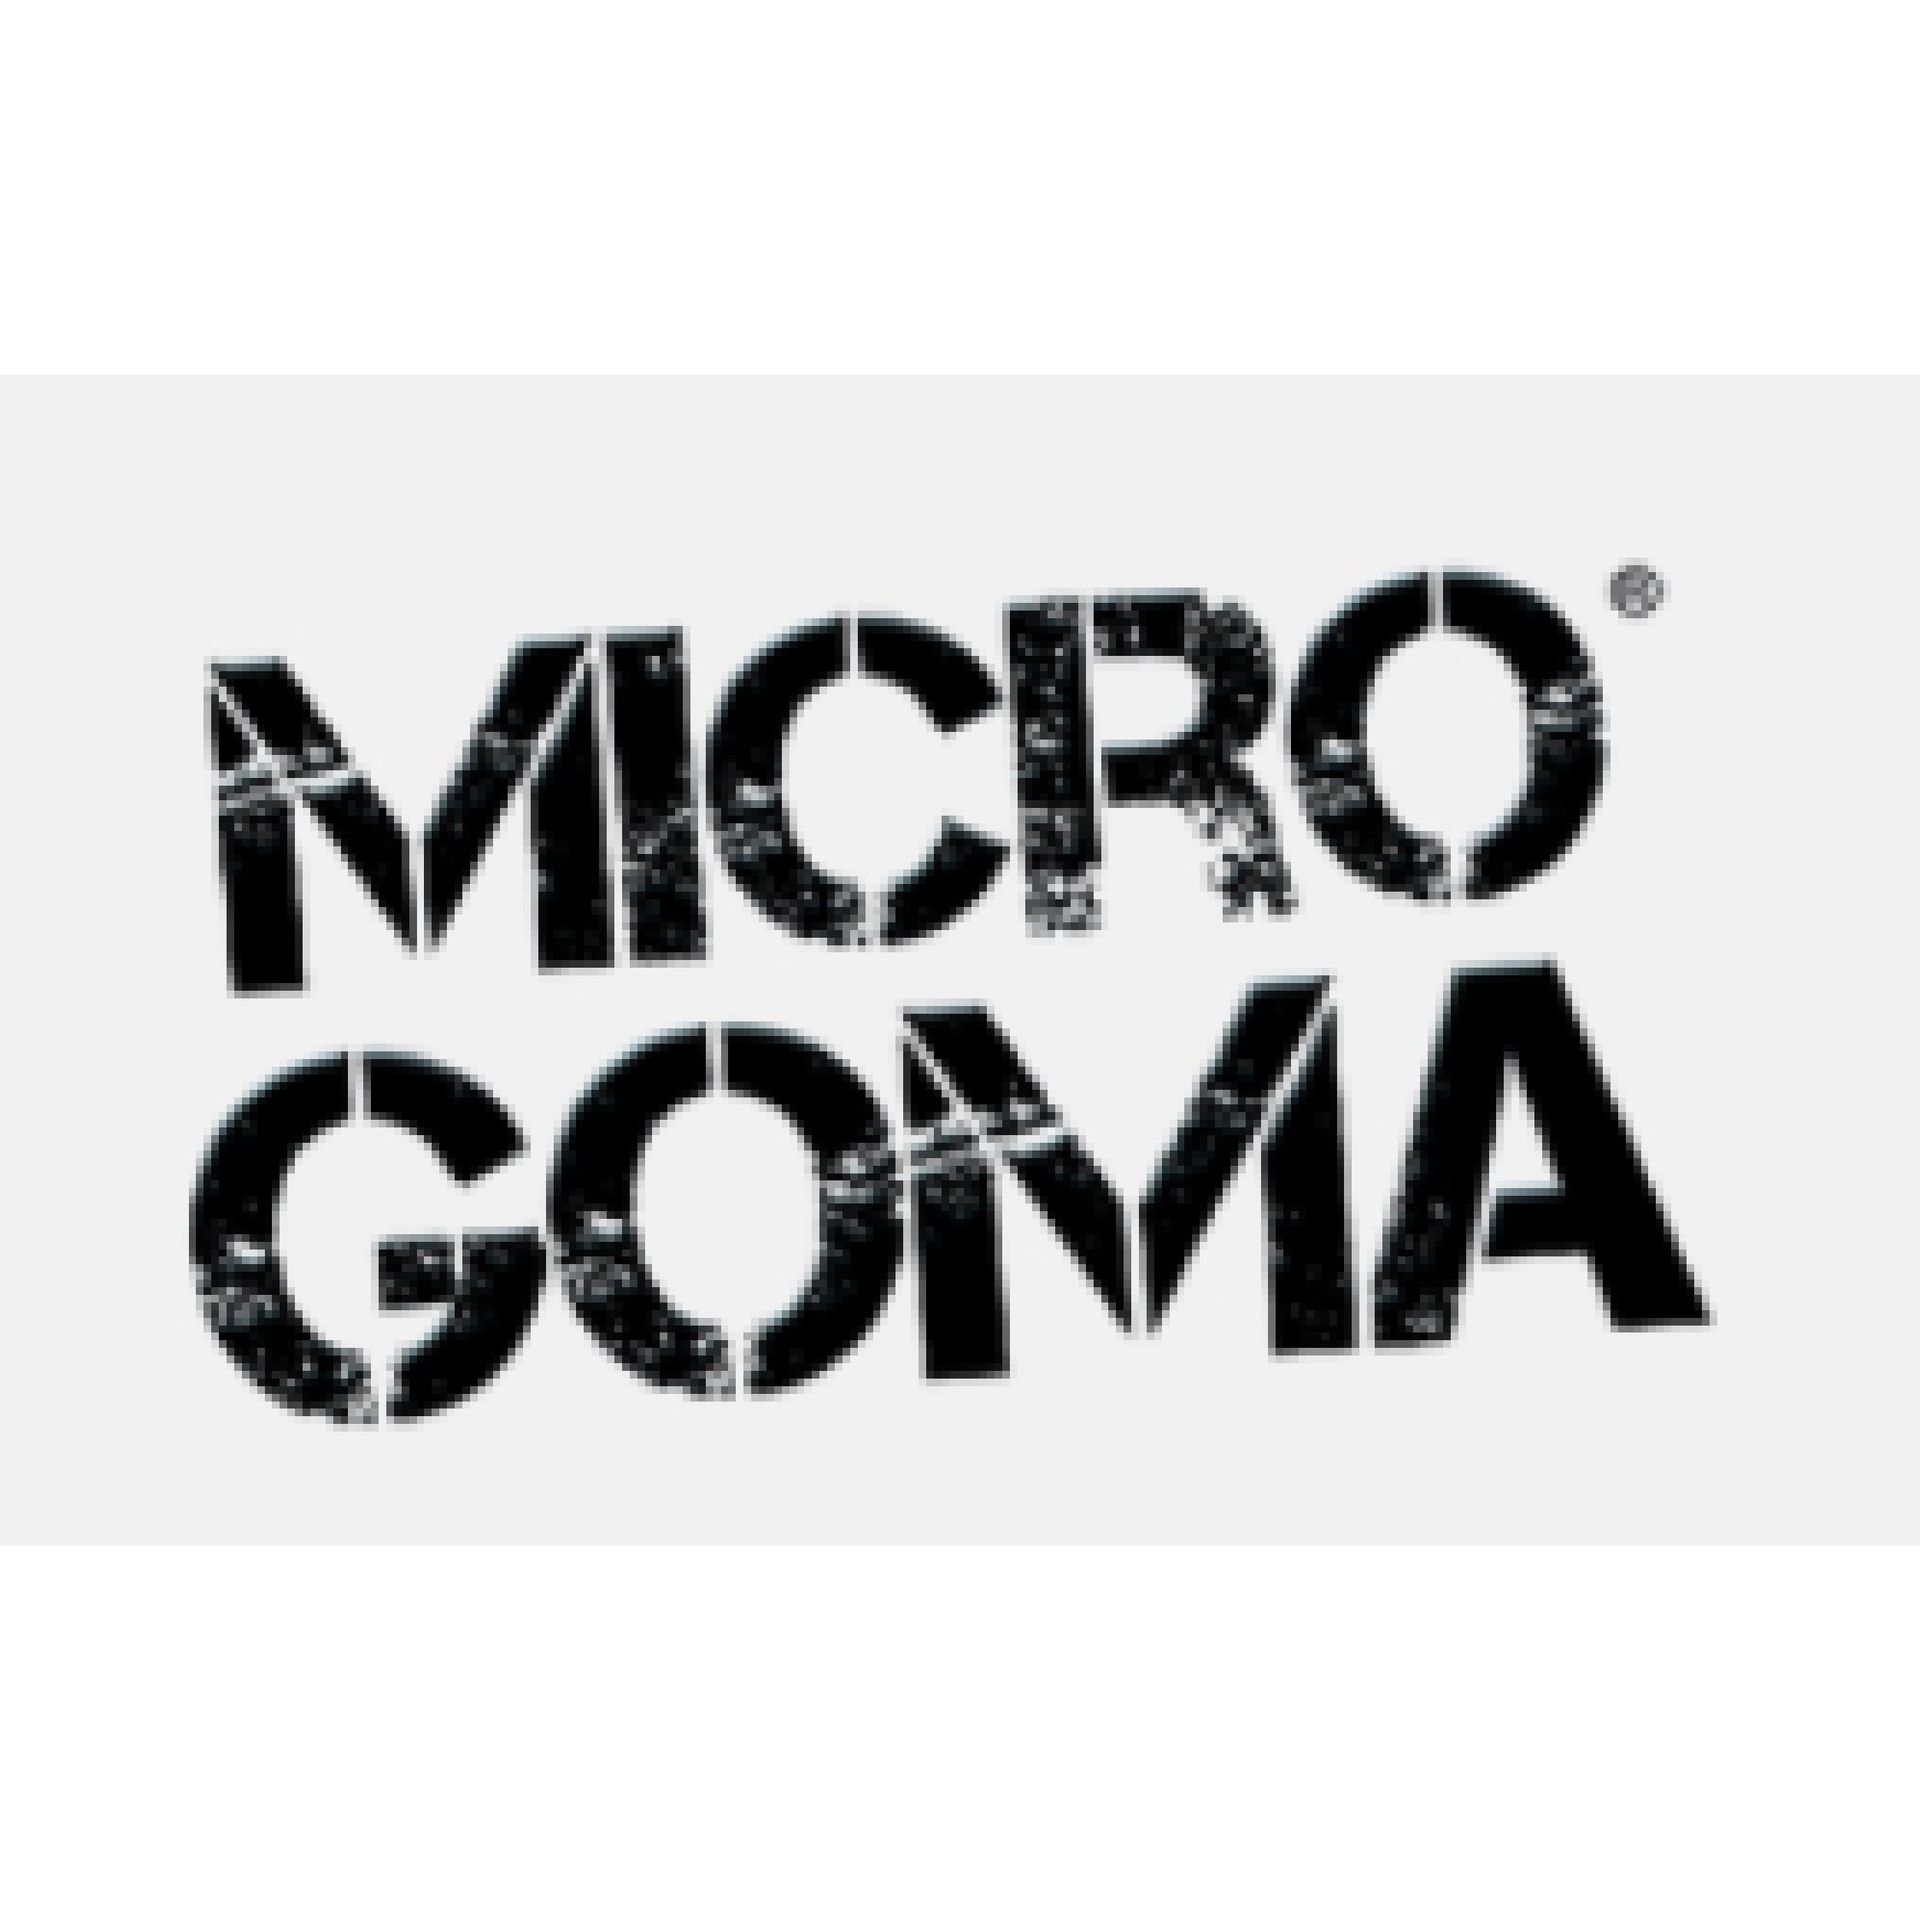 Microgoma